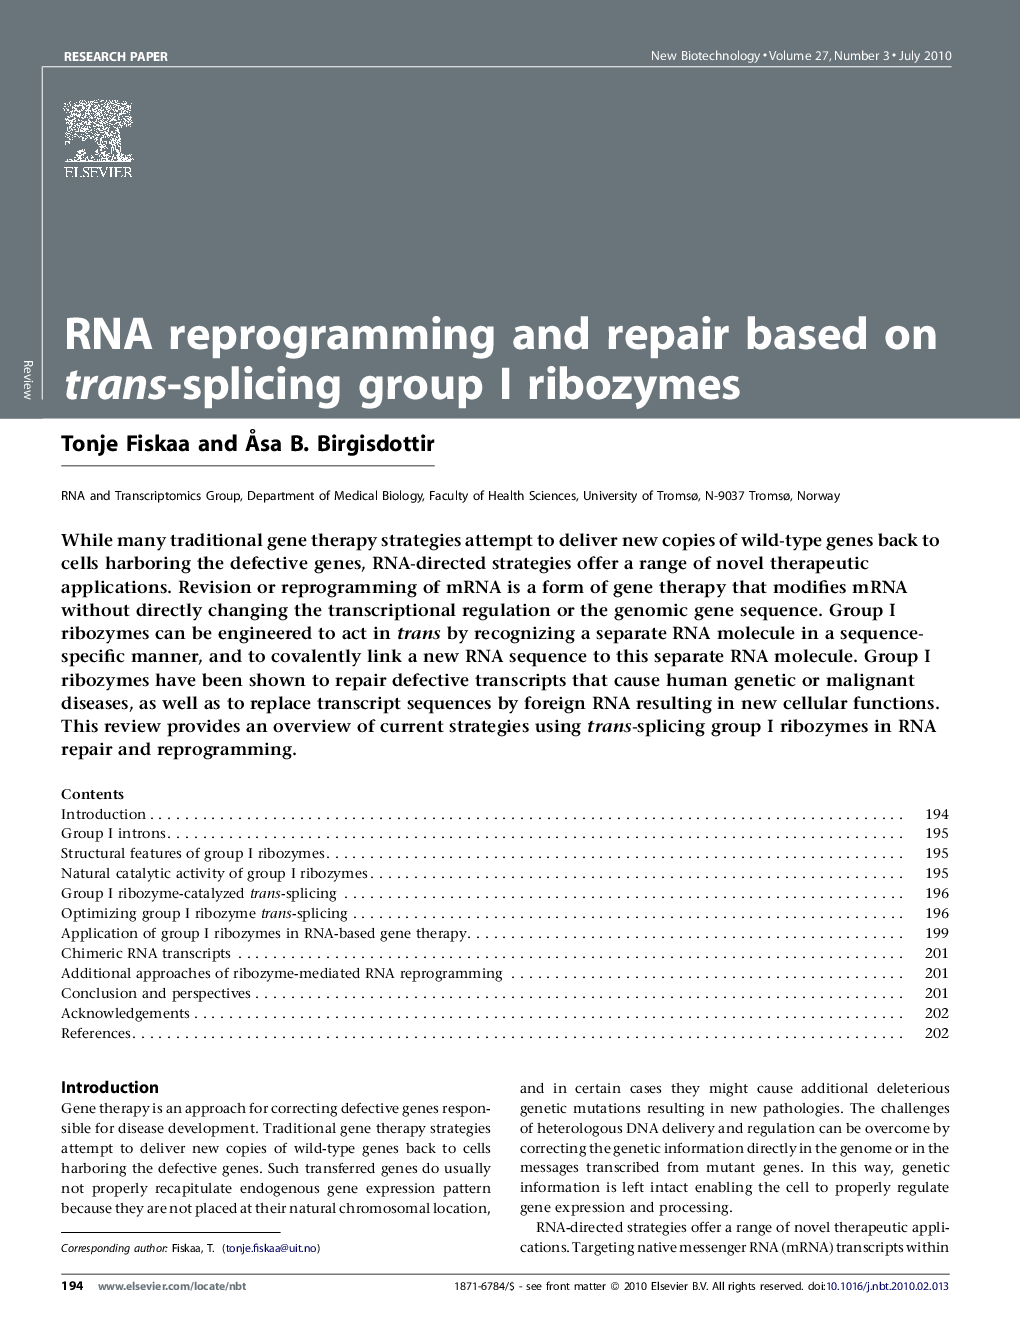 RNA reprogramming and repair based on trans-splicing group I ribozymes